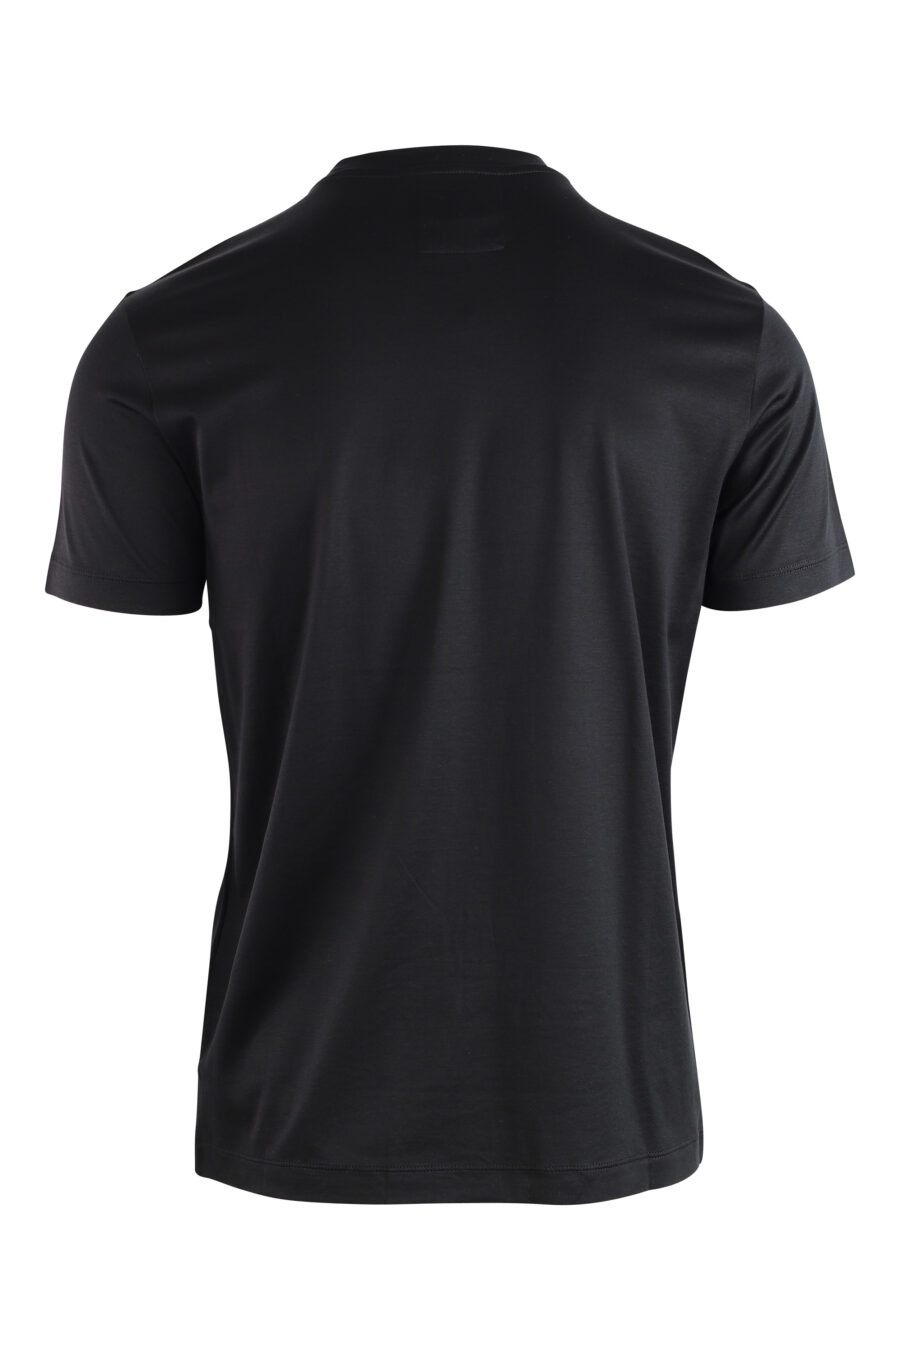 Camiseta negra con logo blanco pequeño - IMG 3742